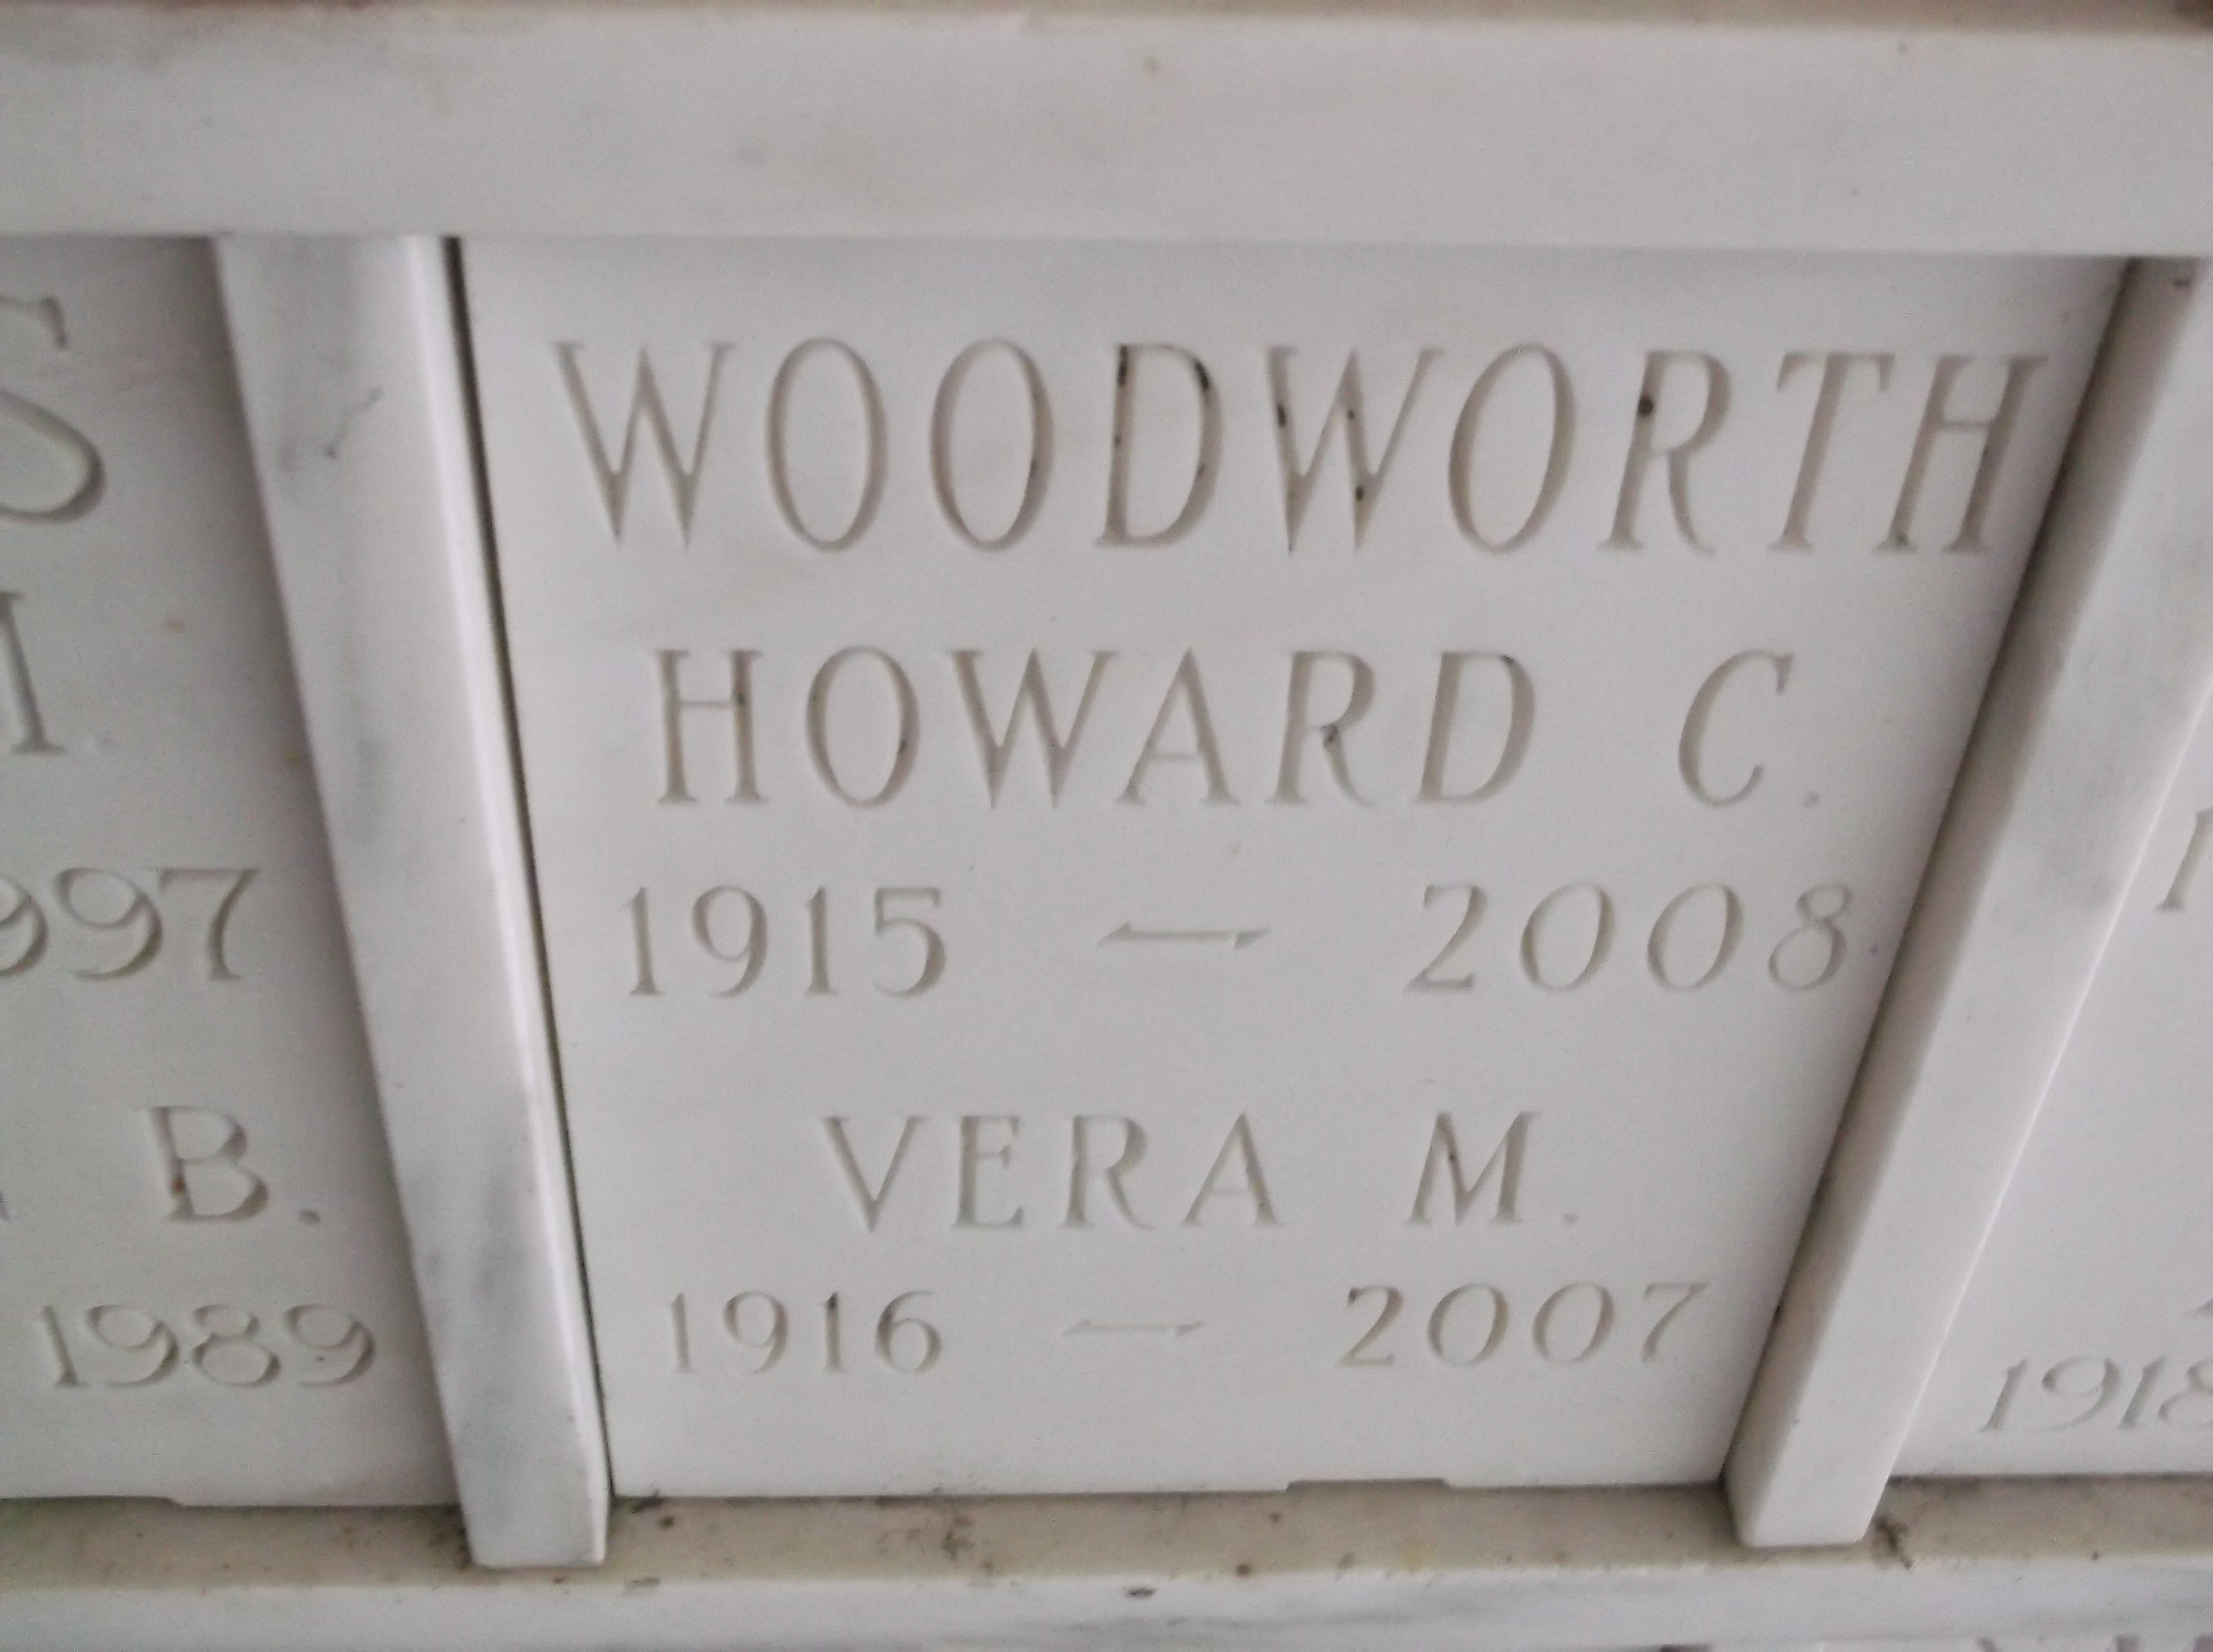 Howard C Woodworth